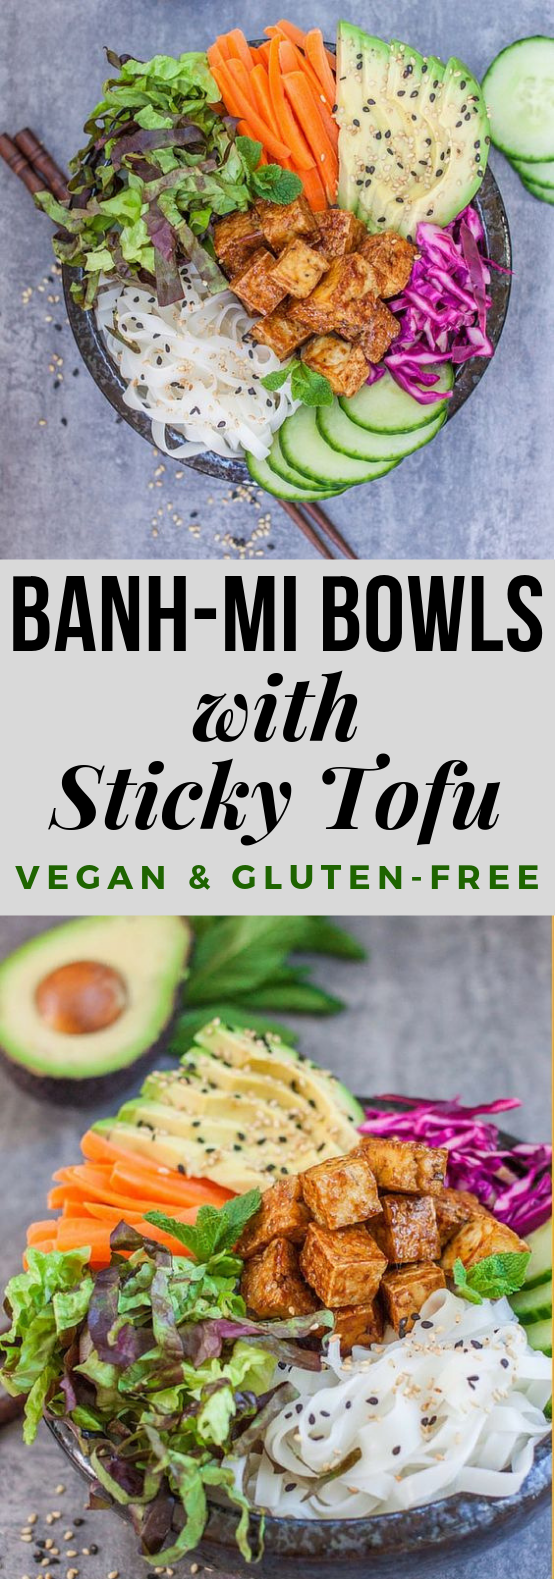 BANH MI BOWLS WITH STICKY TOFU #Vegan #Vegetarian